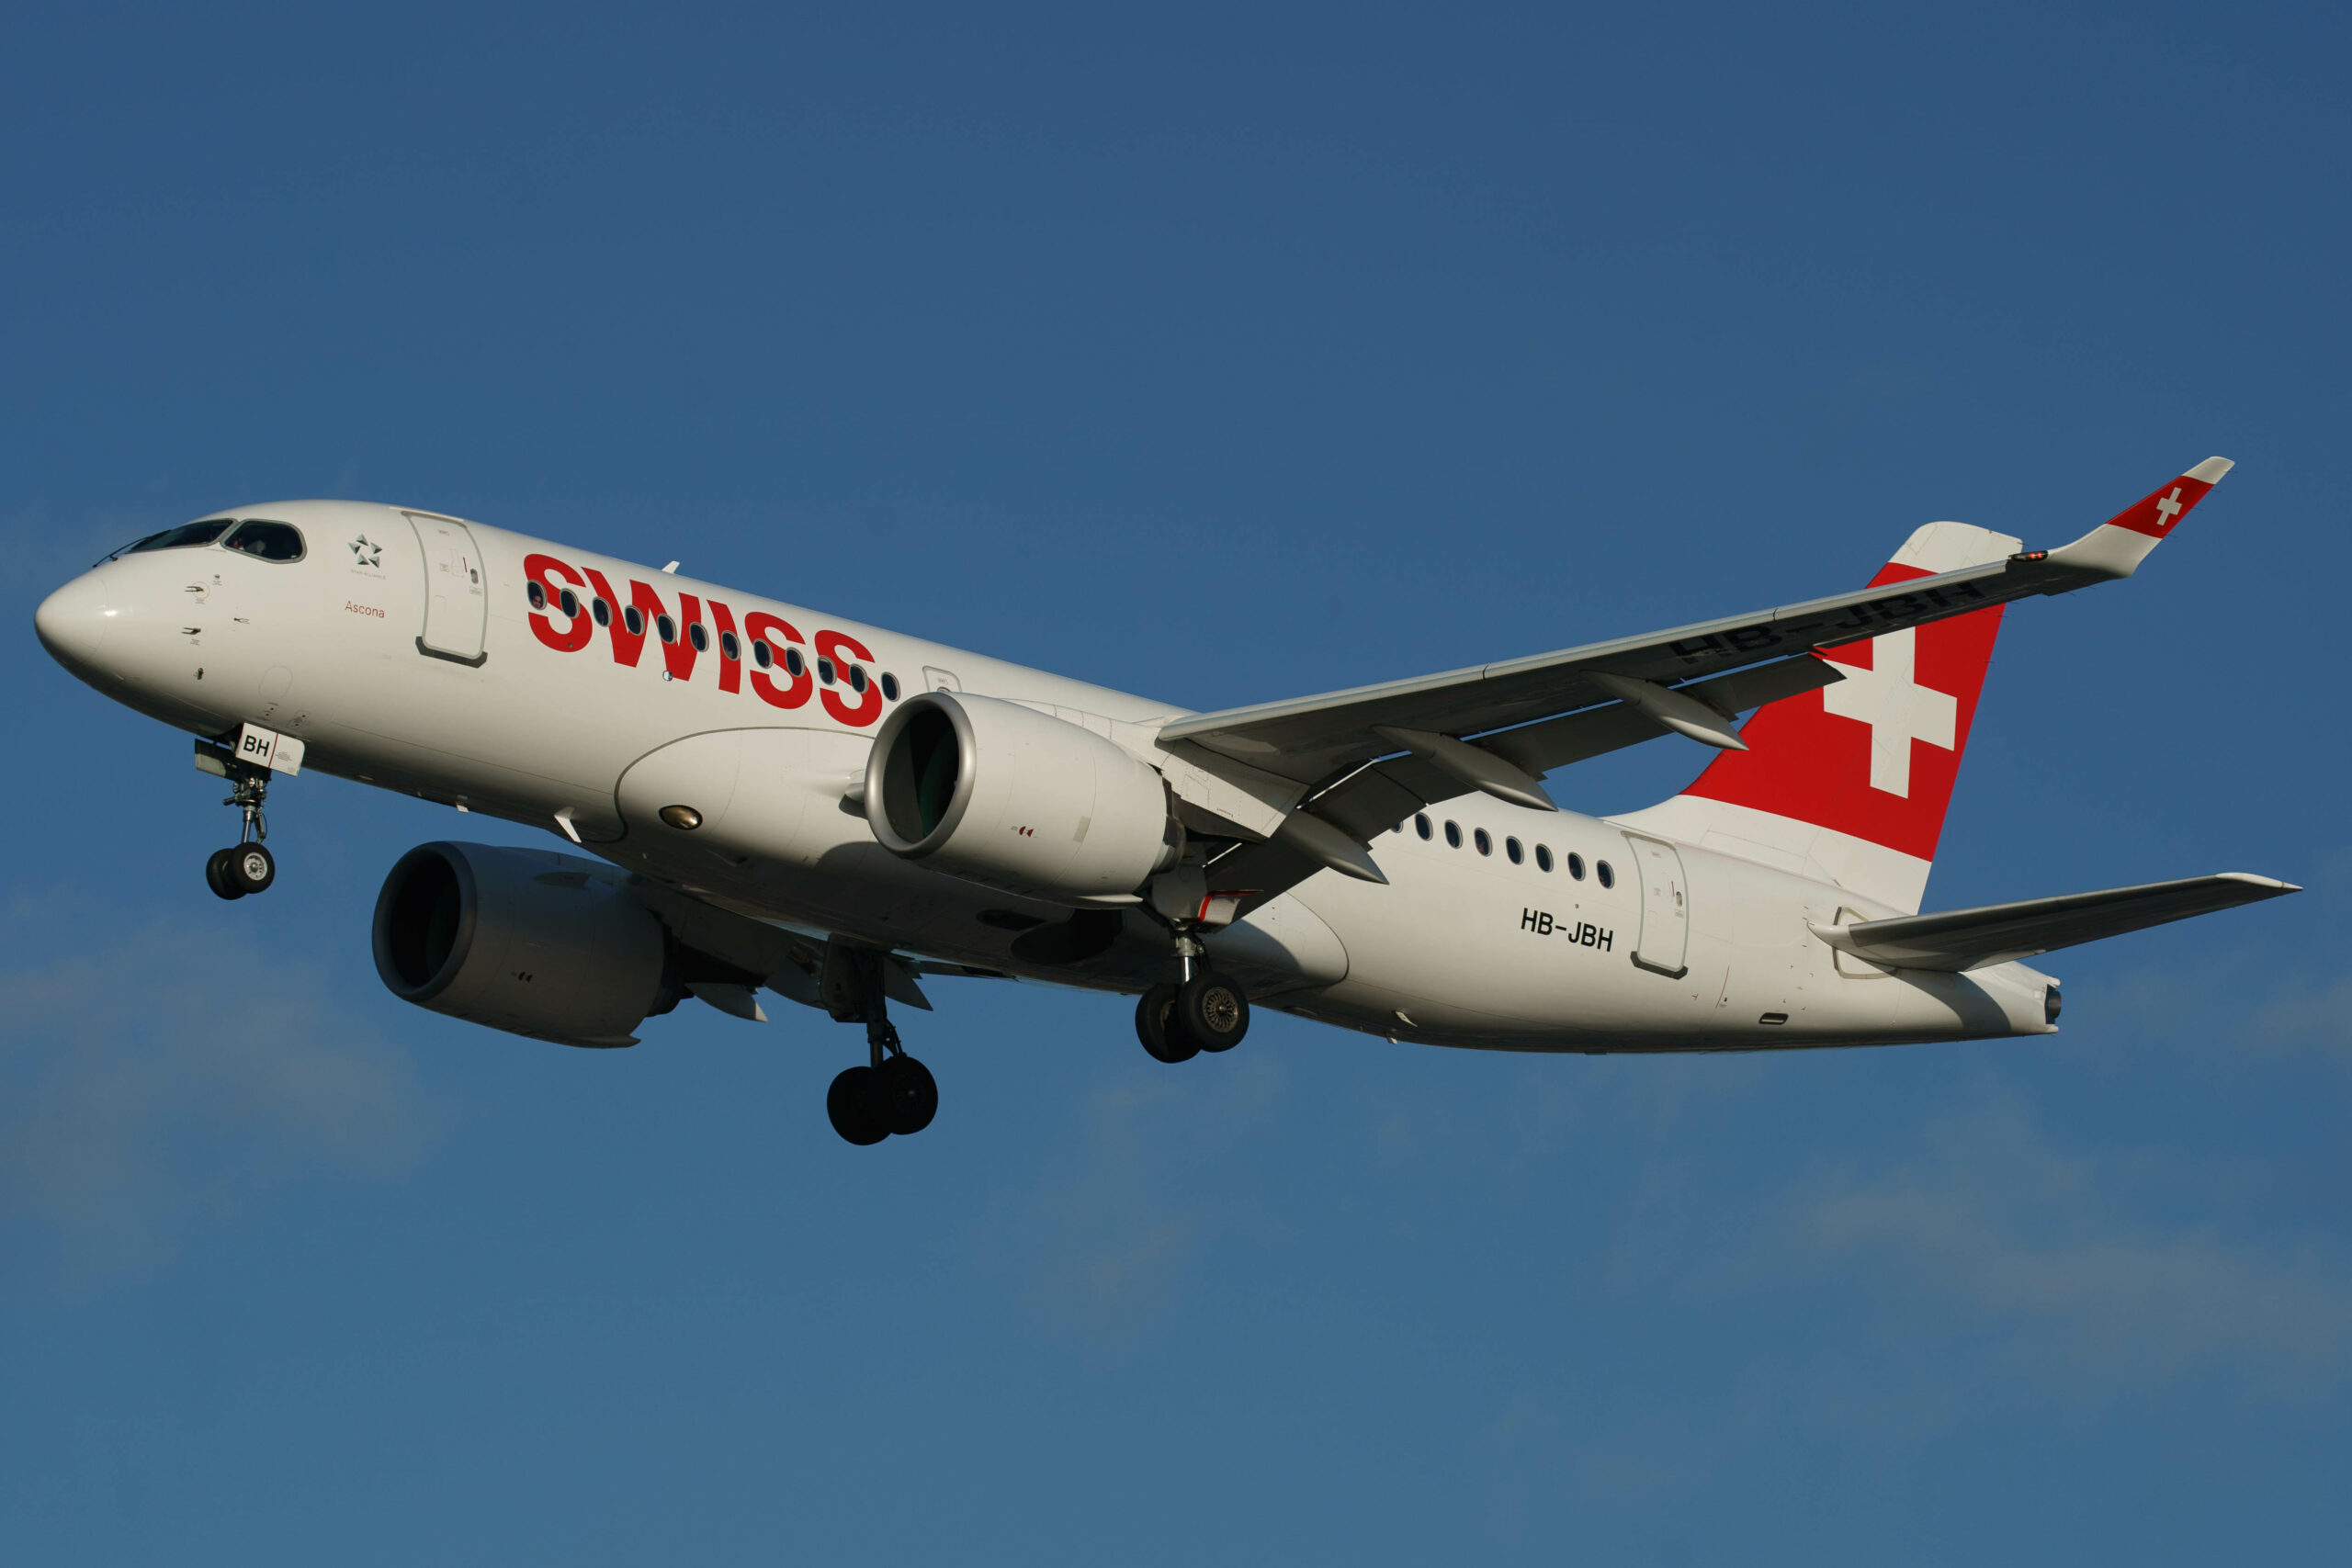 Swiss Airbus A220 landing at Heathrow